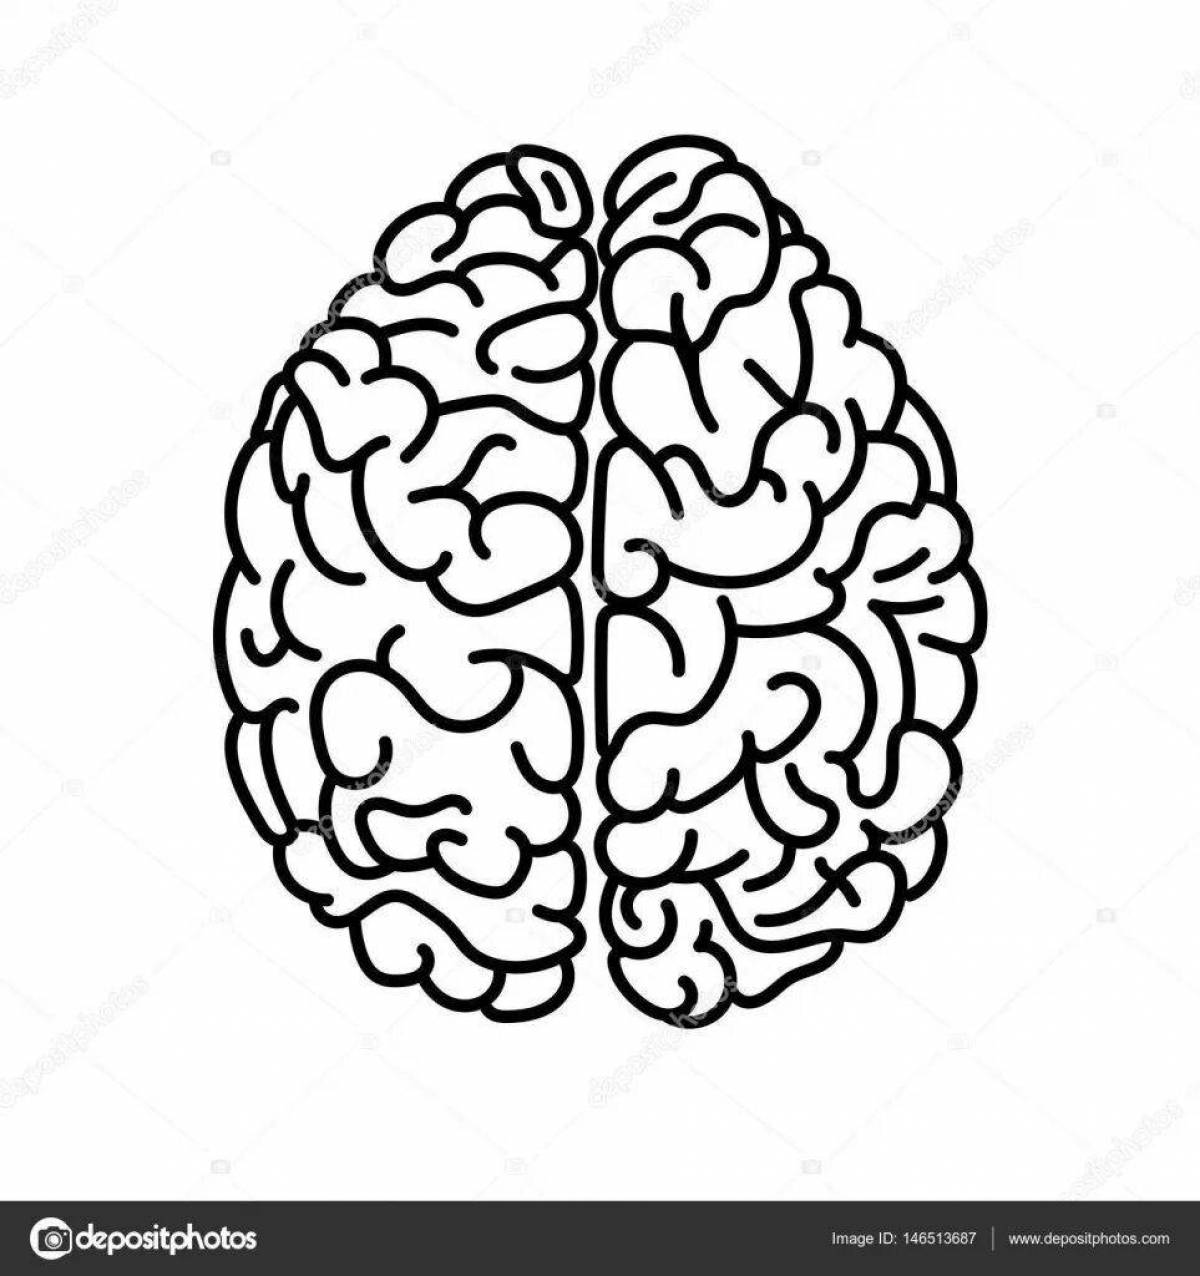 Human brain for kids #14